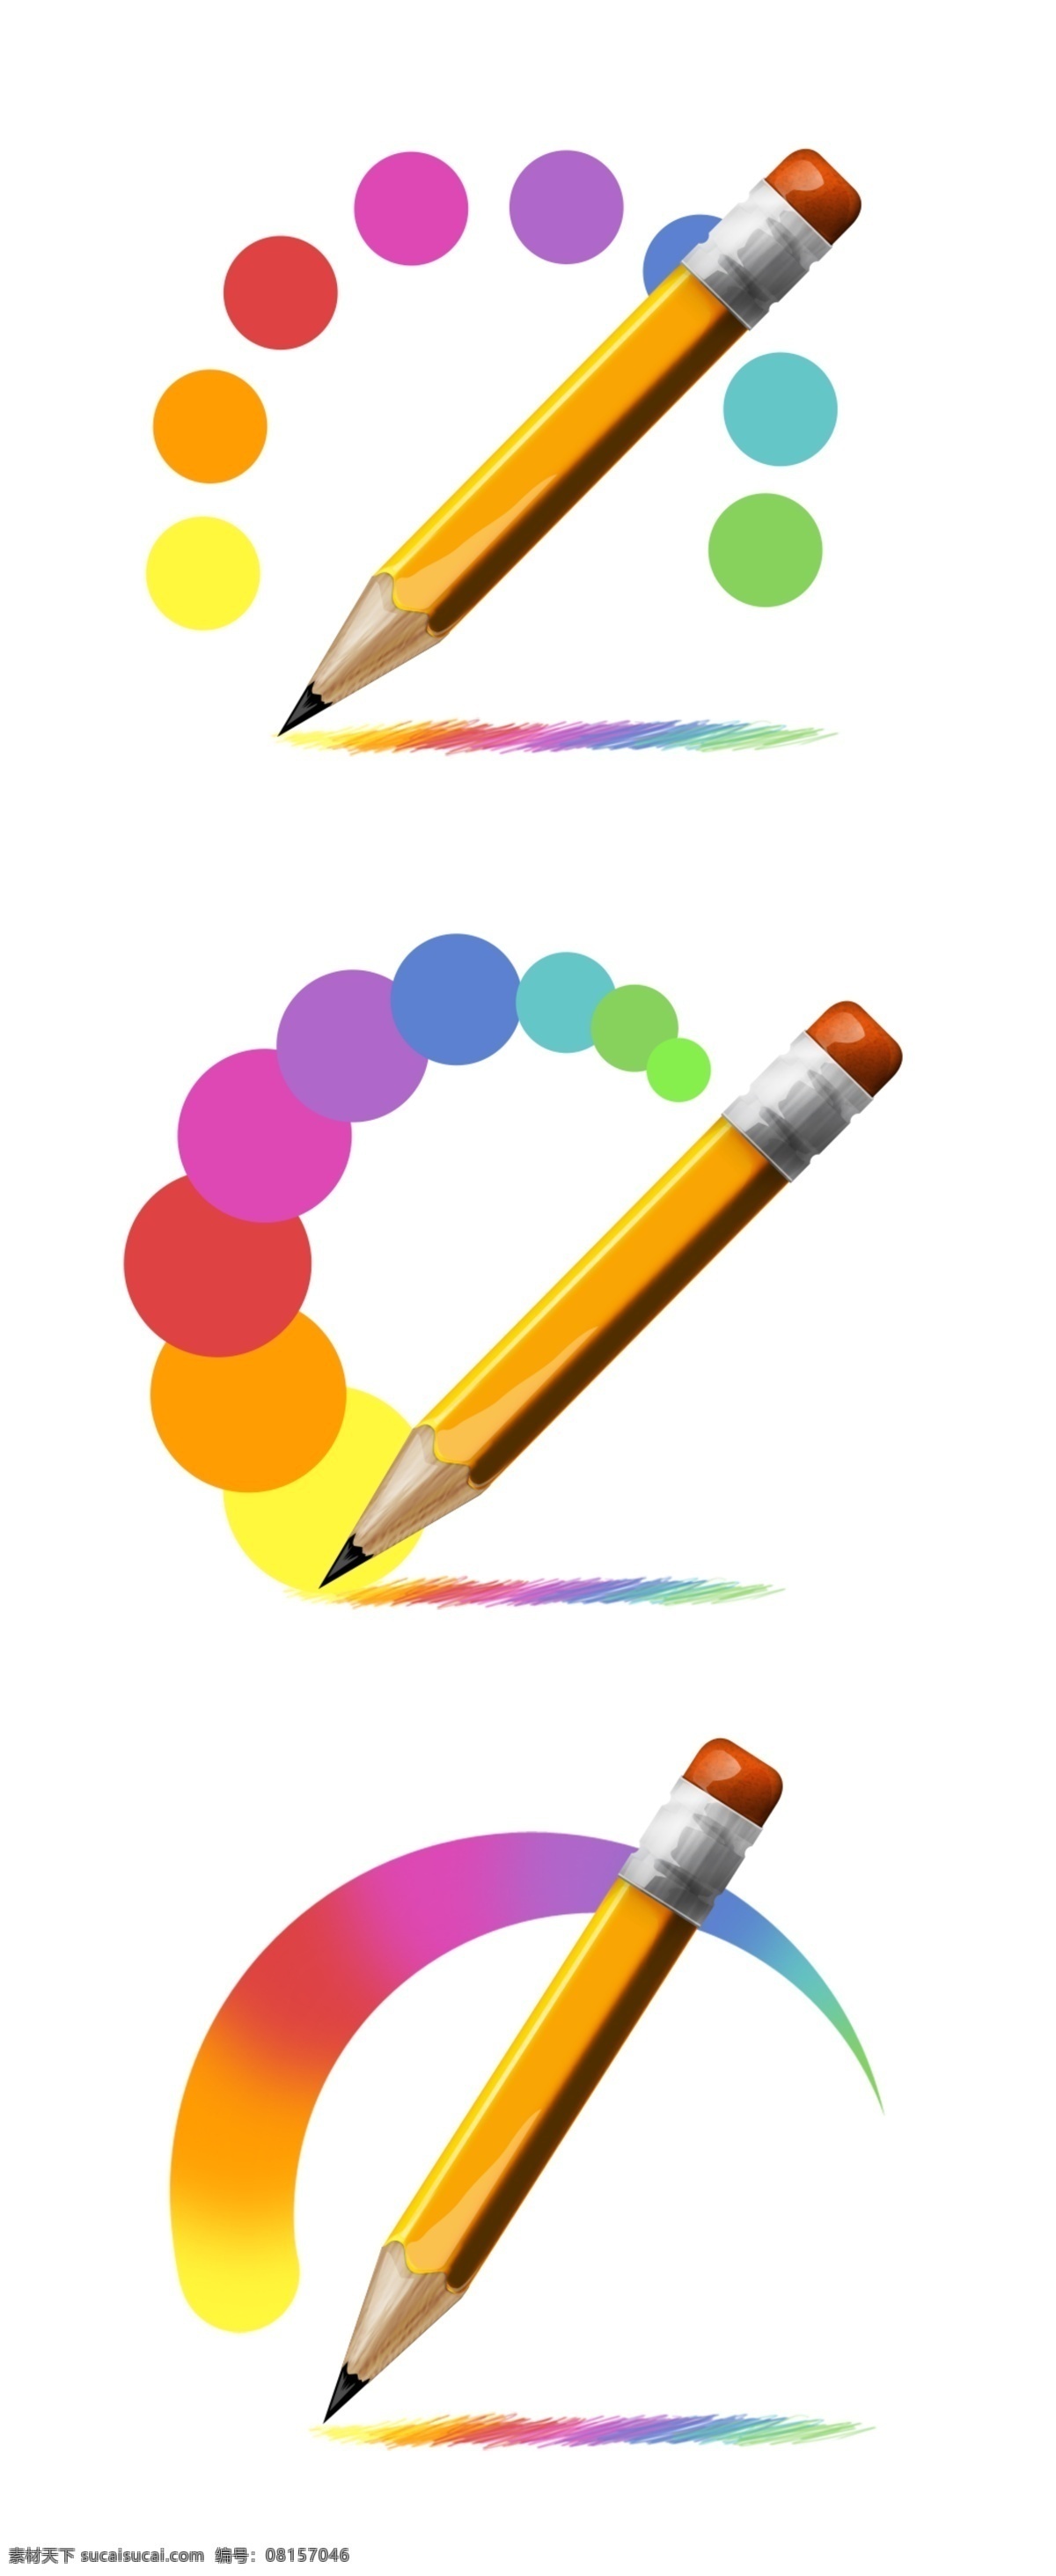 彩色 铅笔 icon 图标素材 图标设计 icon设计 icon图标 网页图标 图标 铅笔图标 铅笔图标设计 铅笔icon 彩色铅笔